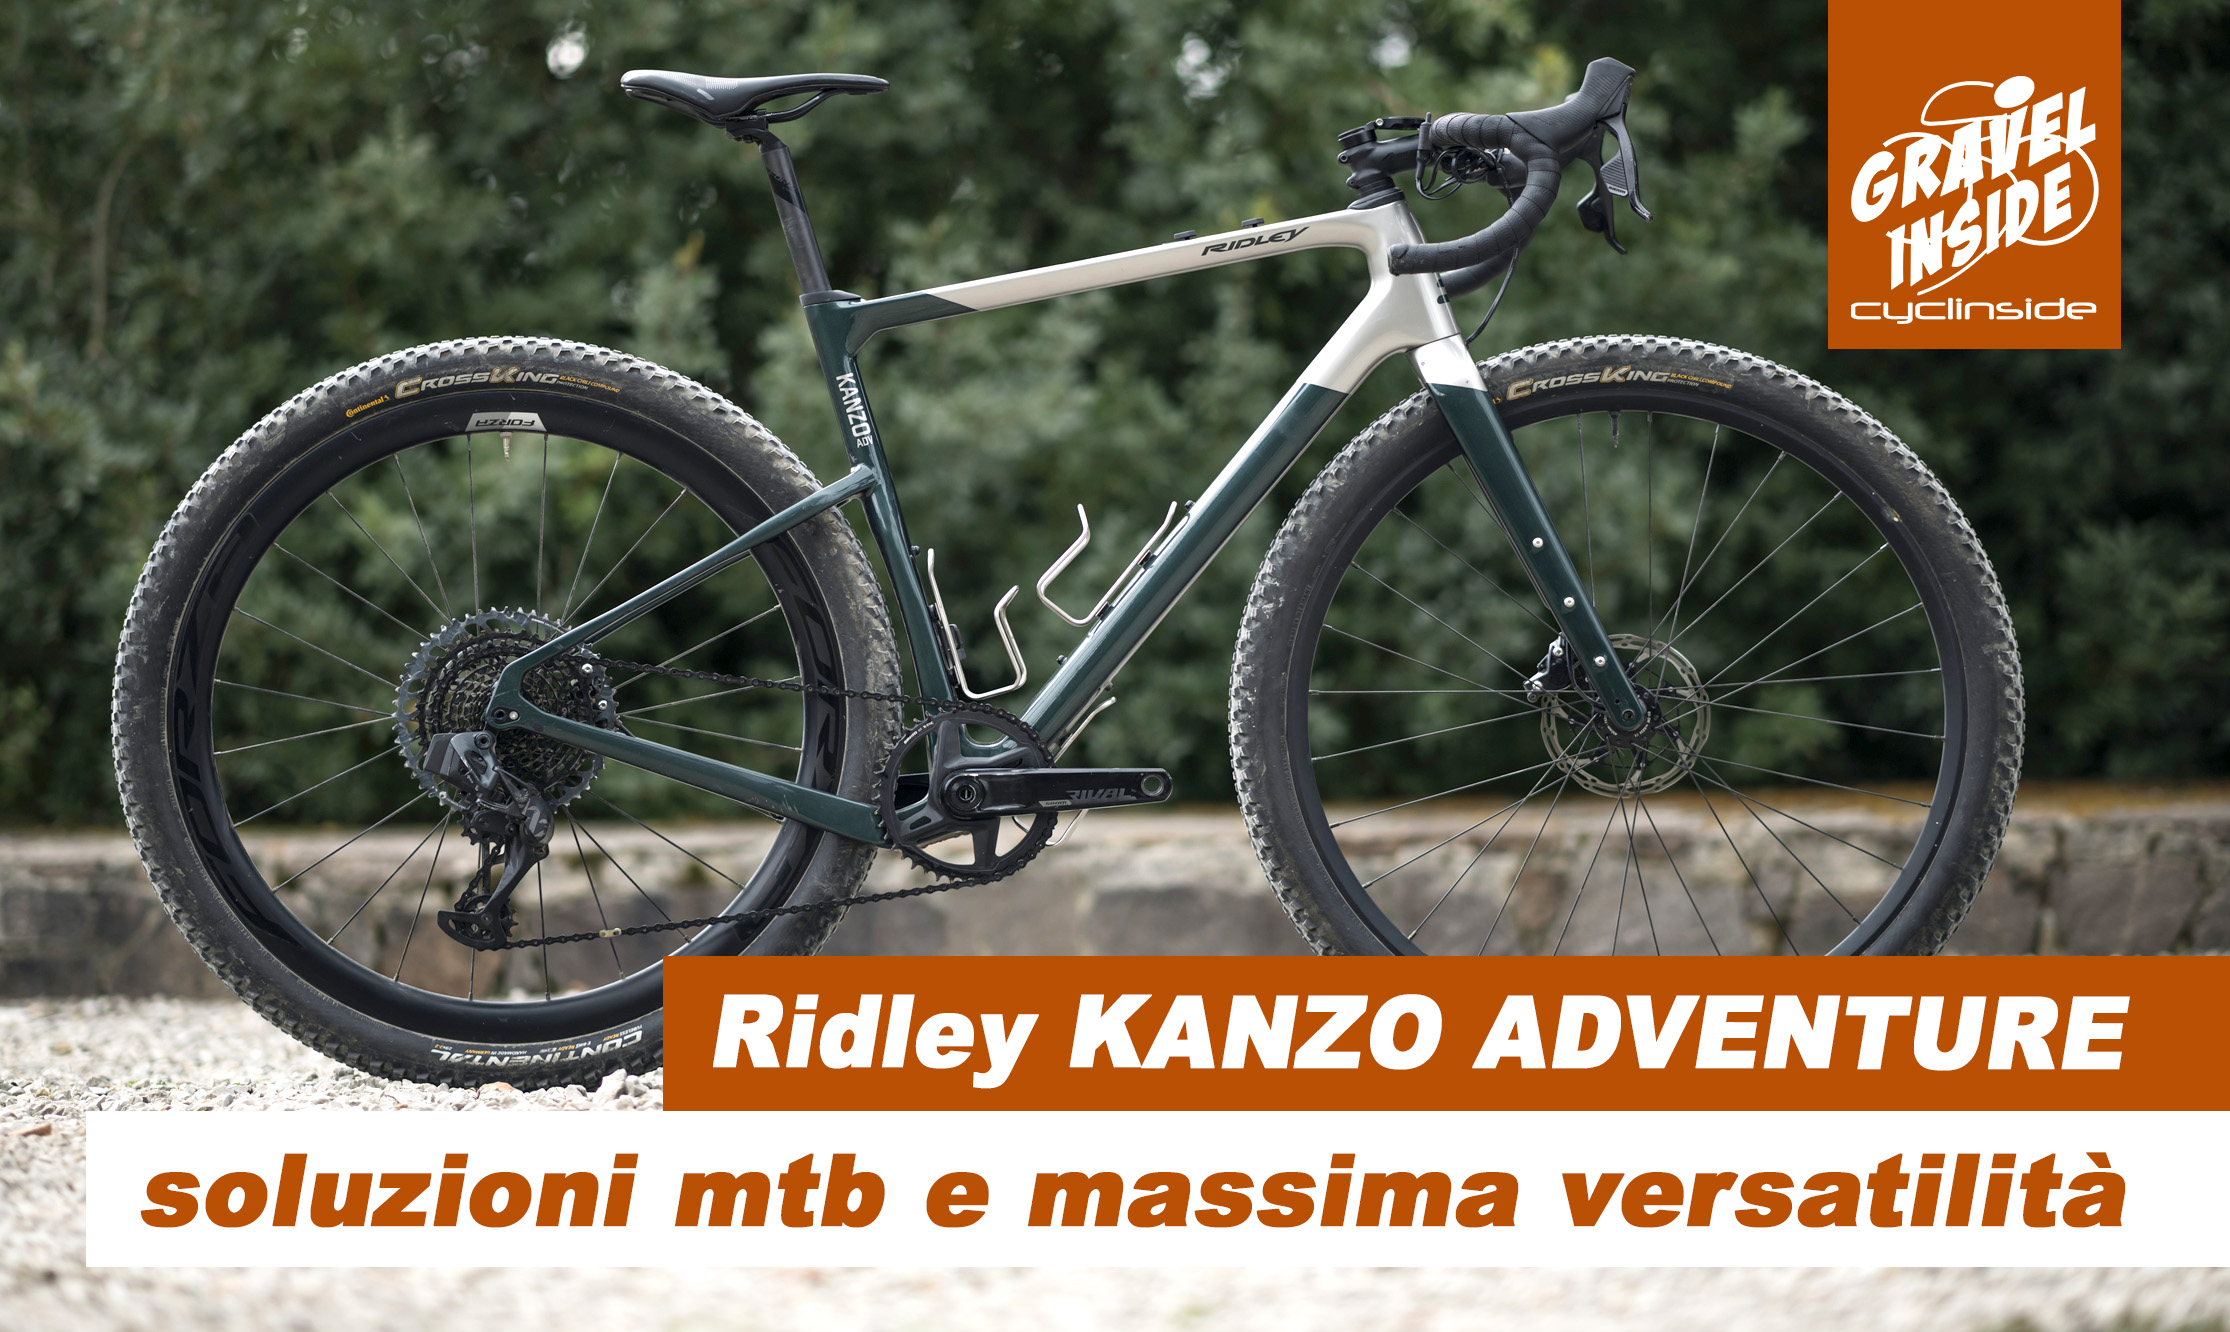 D STERZO CARBONIO Ghiaia frameset Arancione Nuovo Ridley Kanzo Adventure 